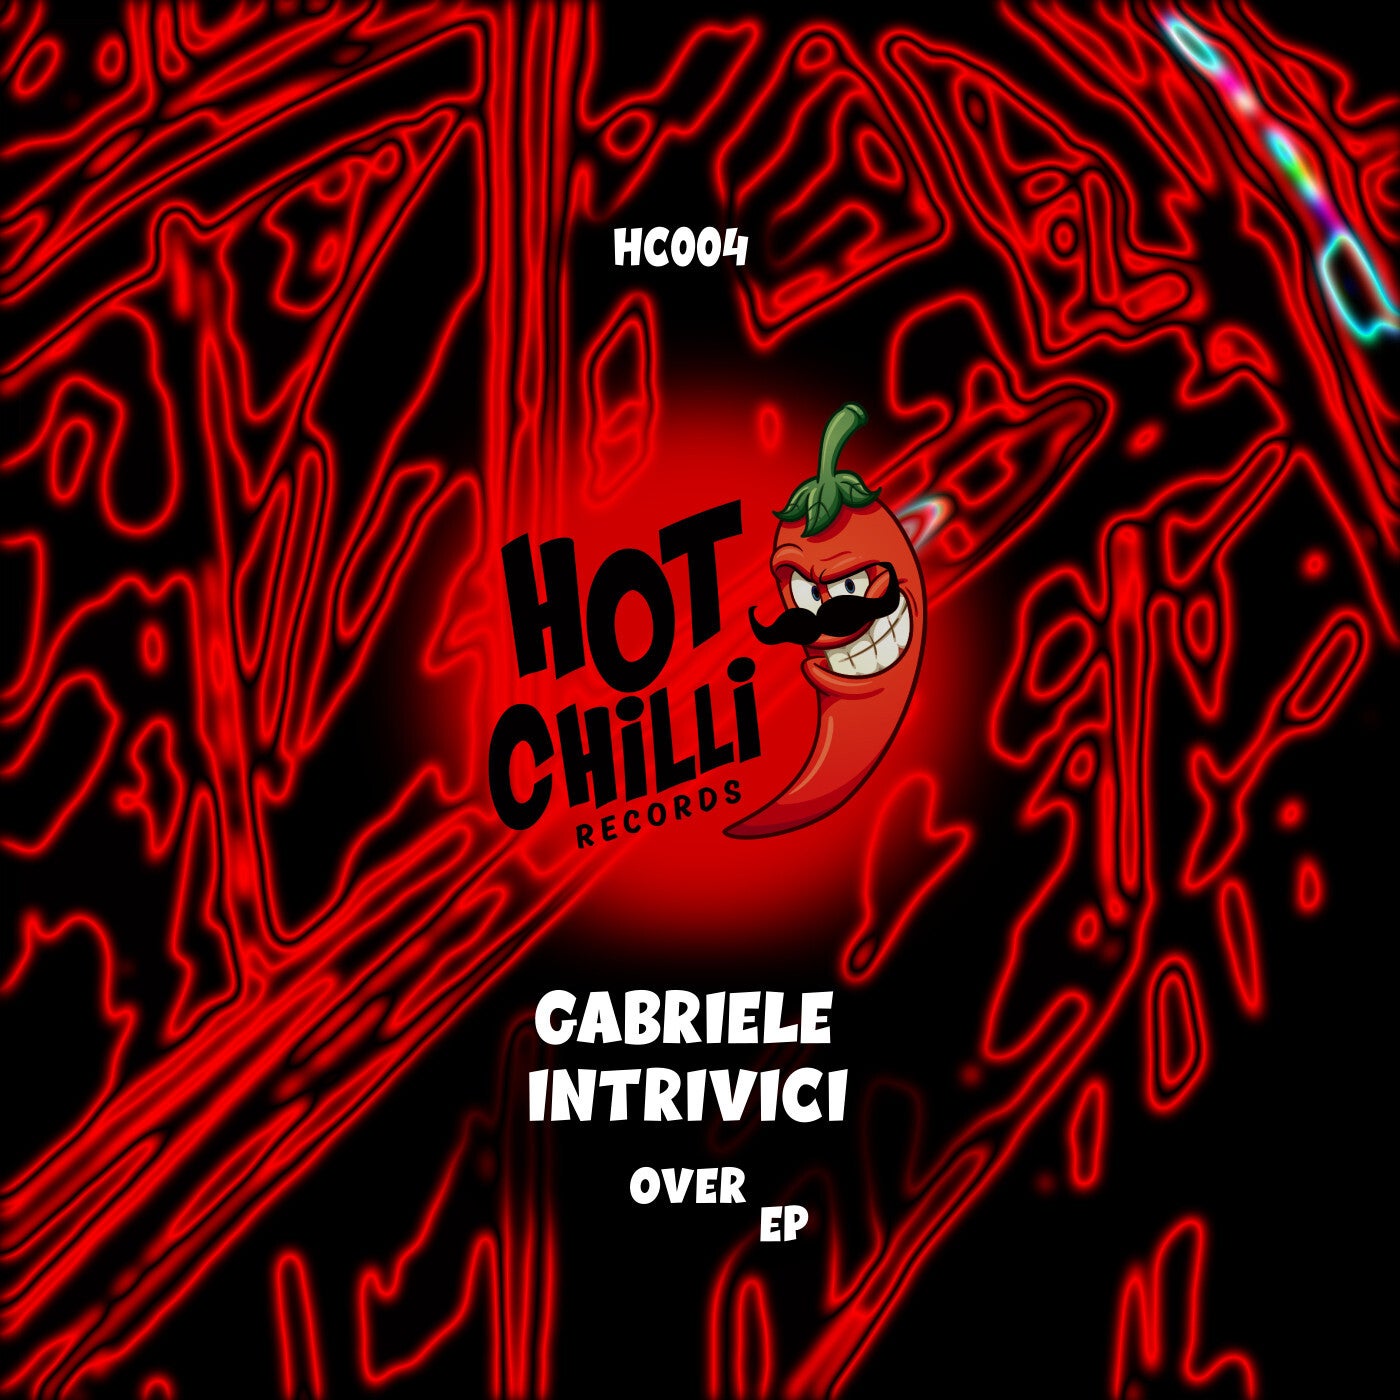 Gabriele Intrivici - Over EP [HC004]